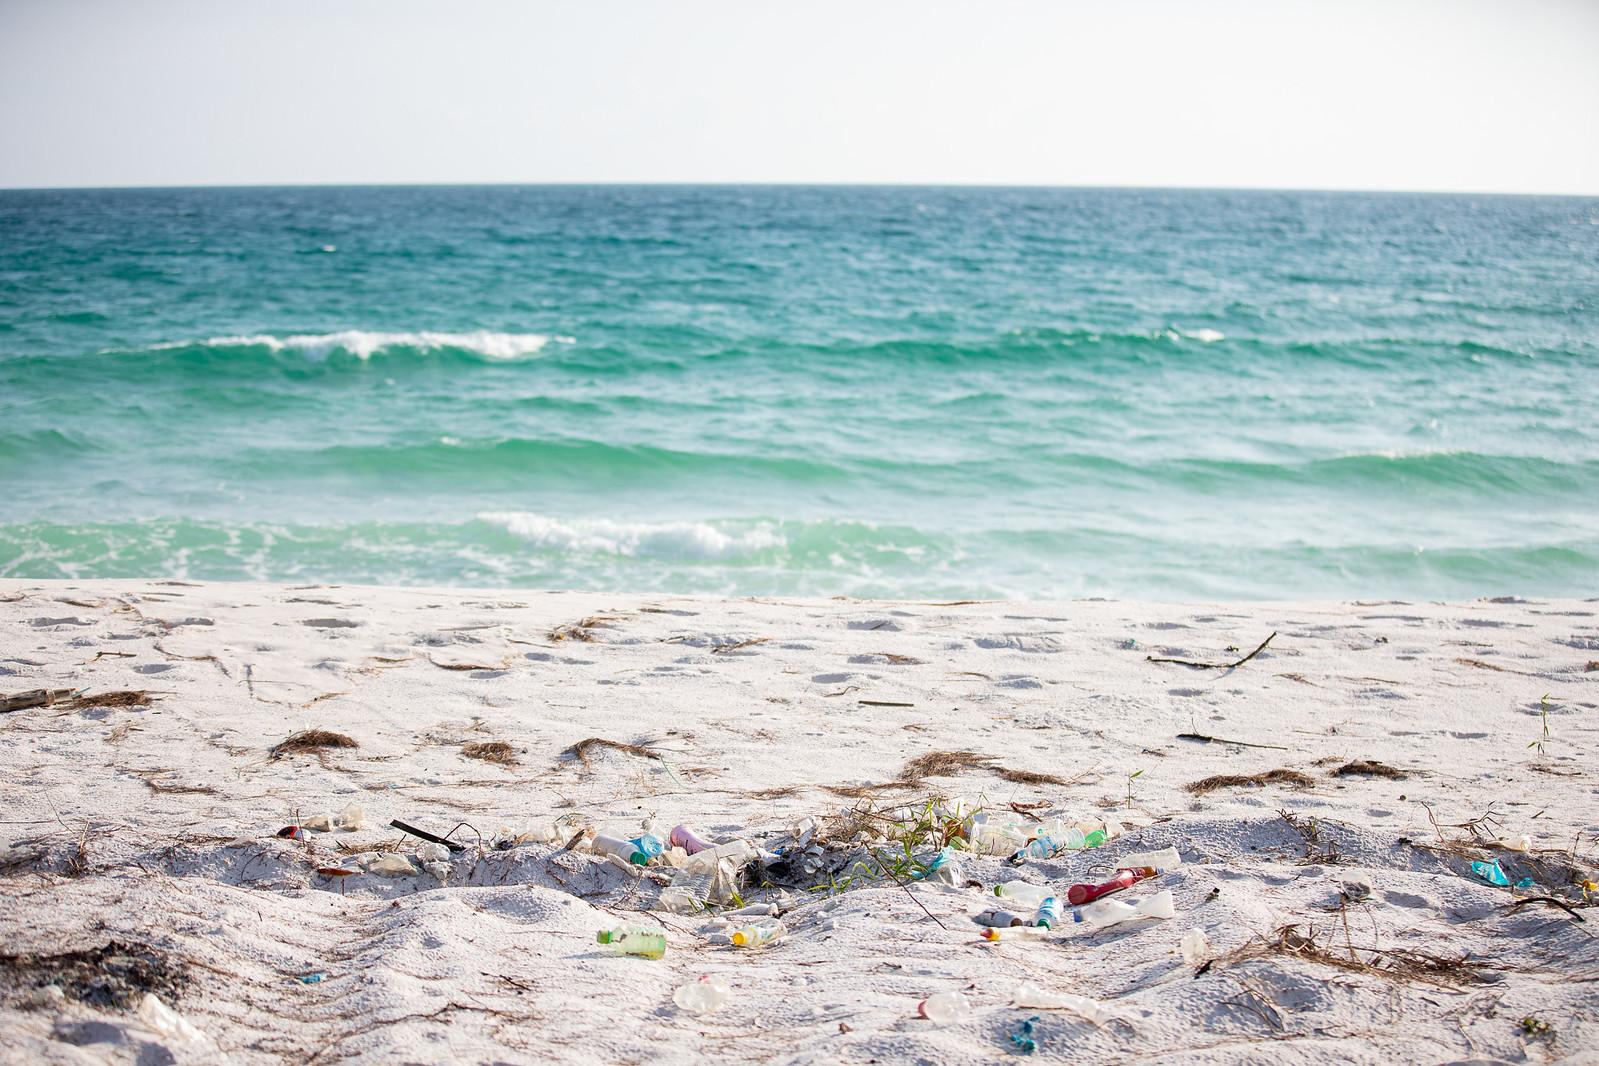 Marine plastic pollution